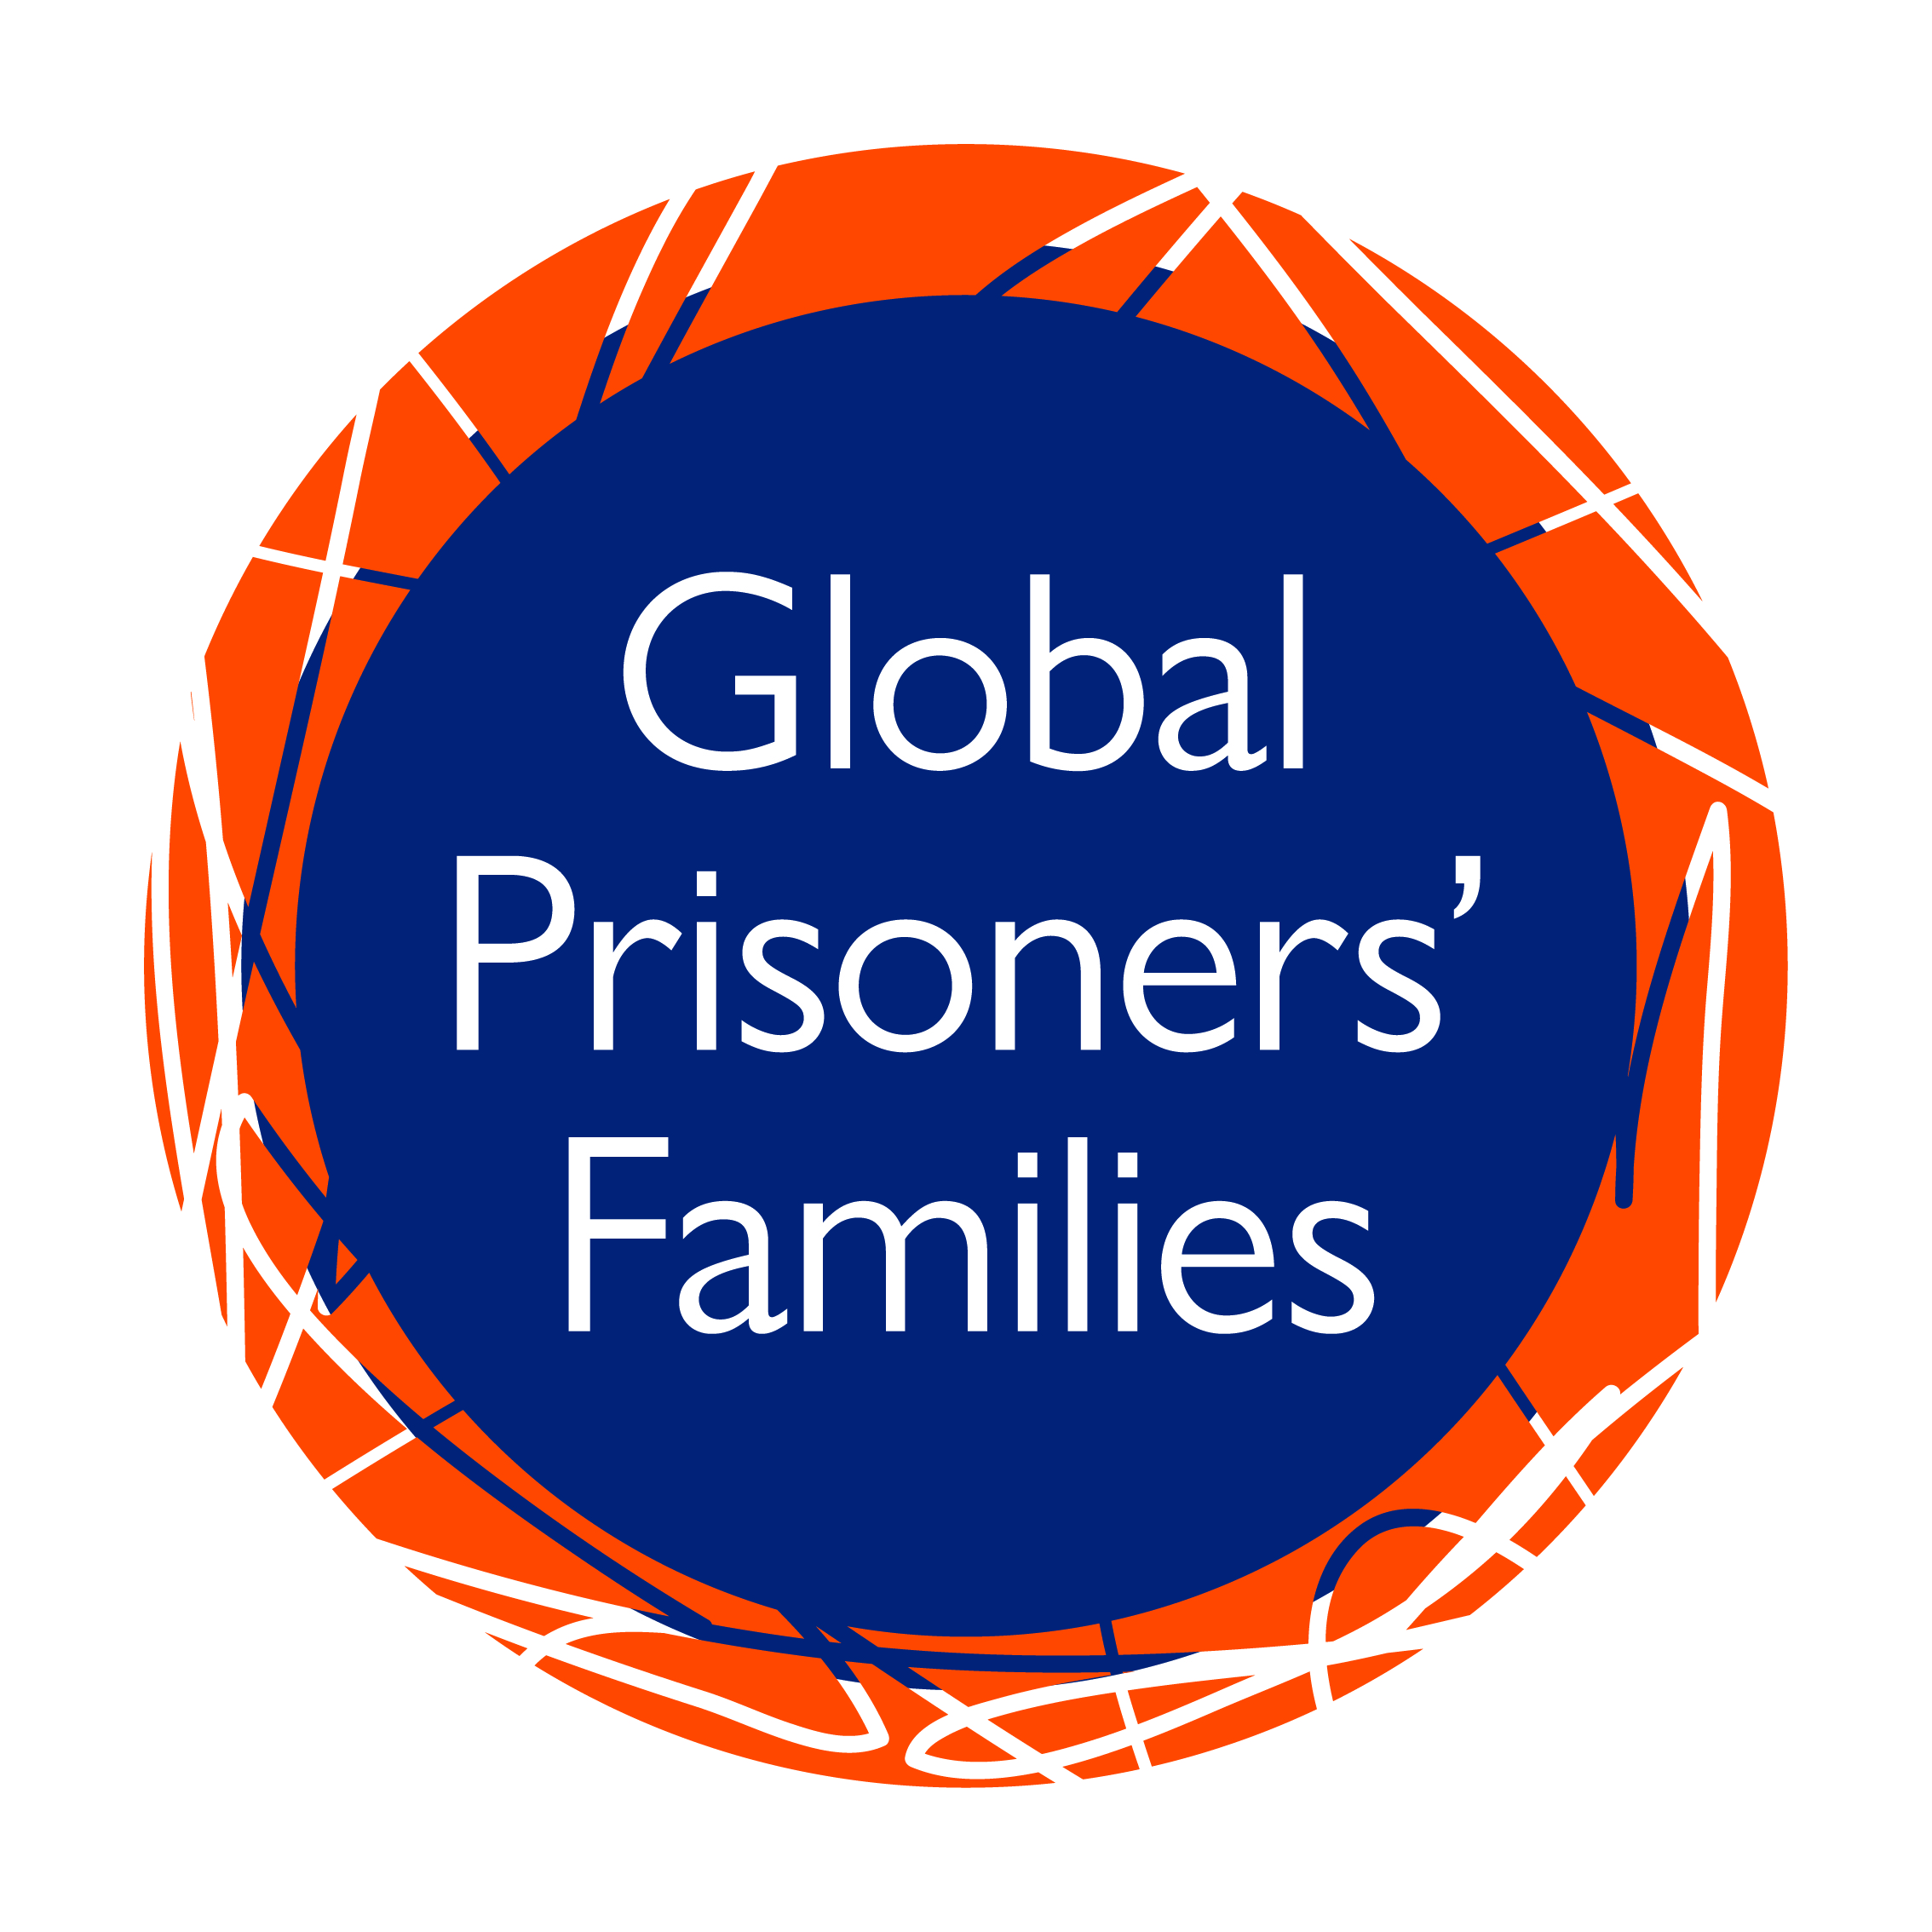 Global Prisoners' Families